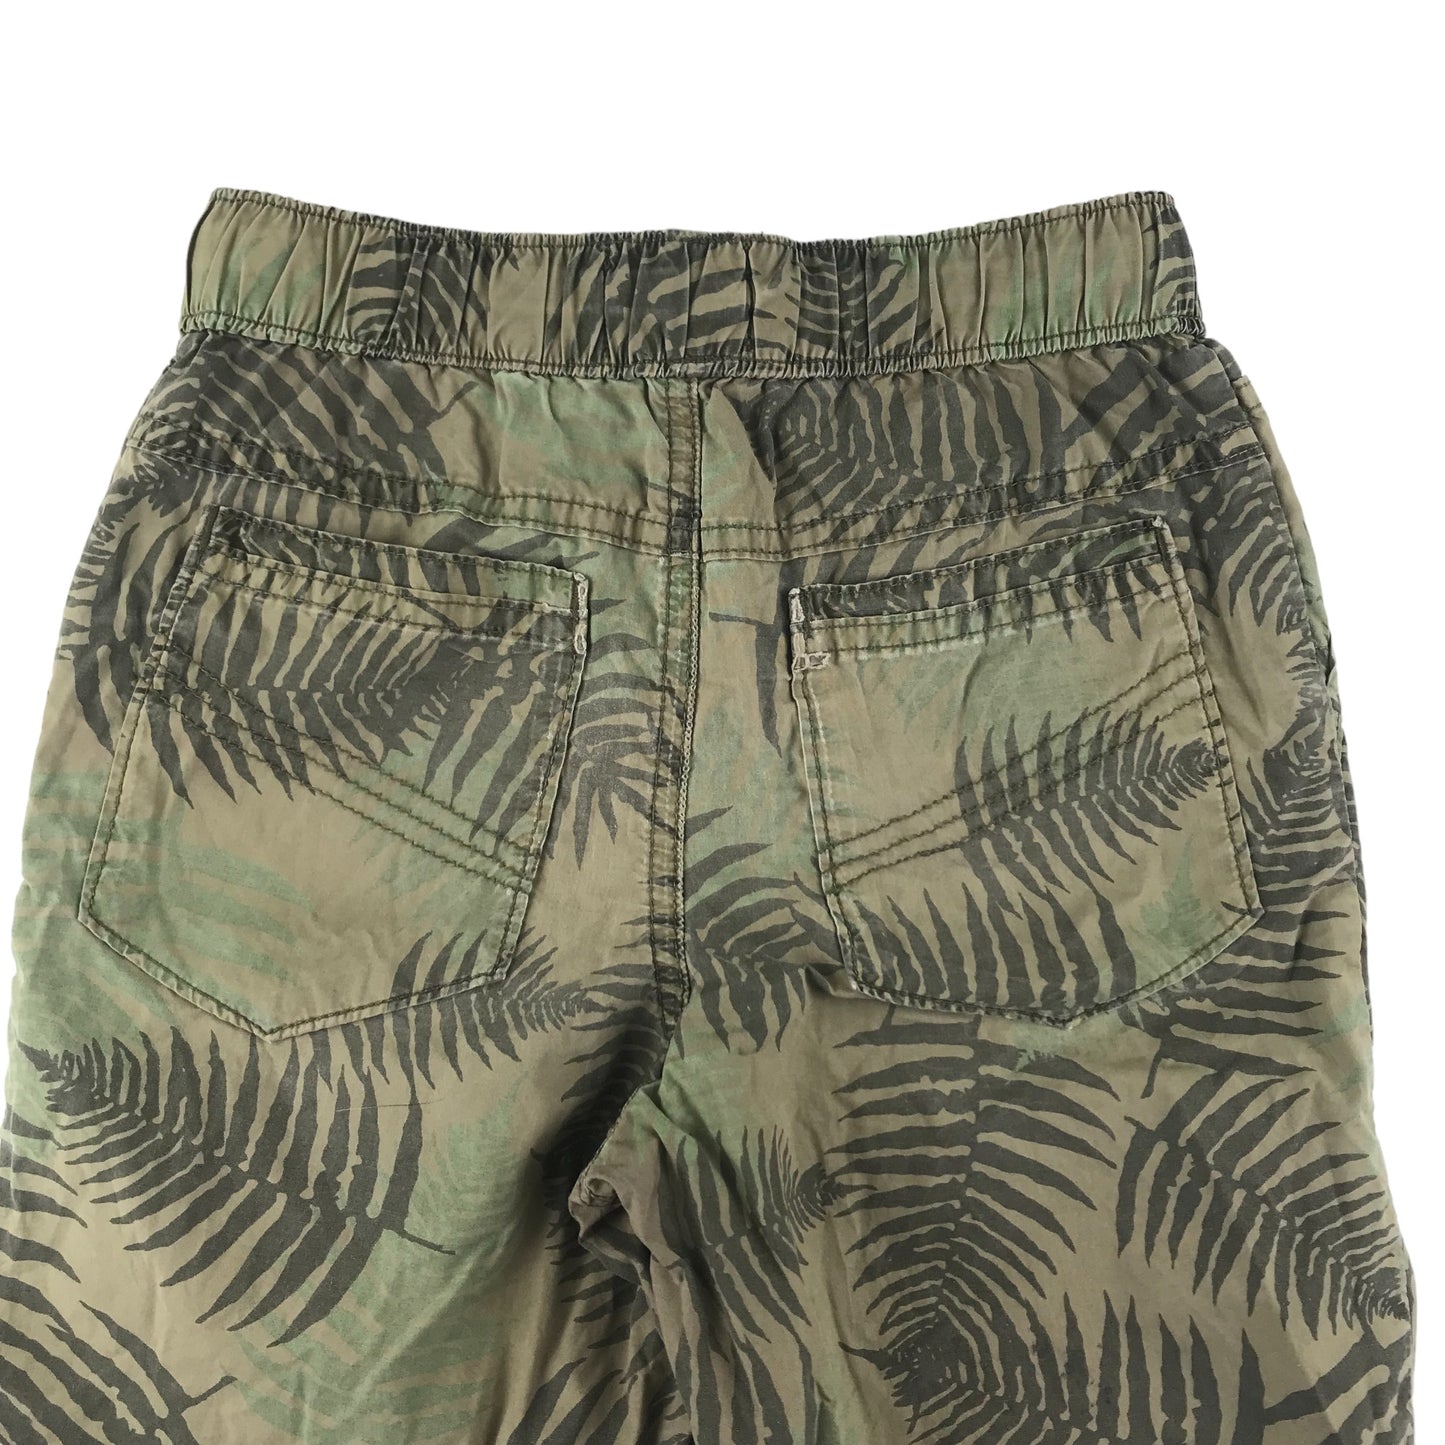 M&S Shorts Age 6 Khaki Green Camo Style Leafy Print Pattern Cotton